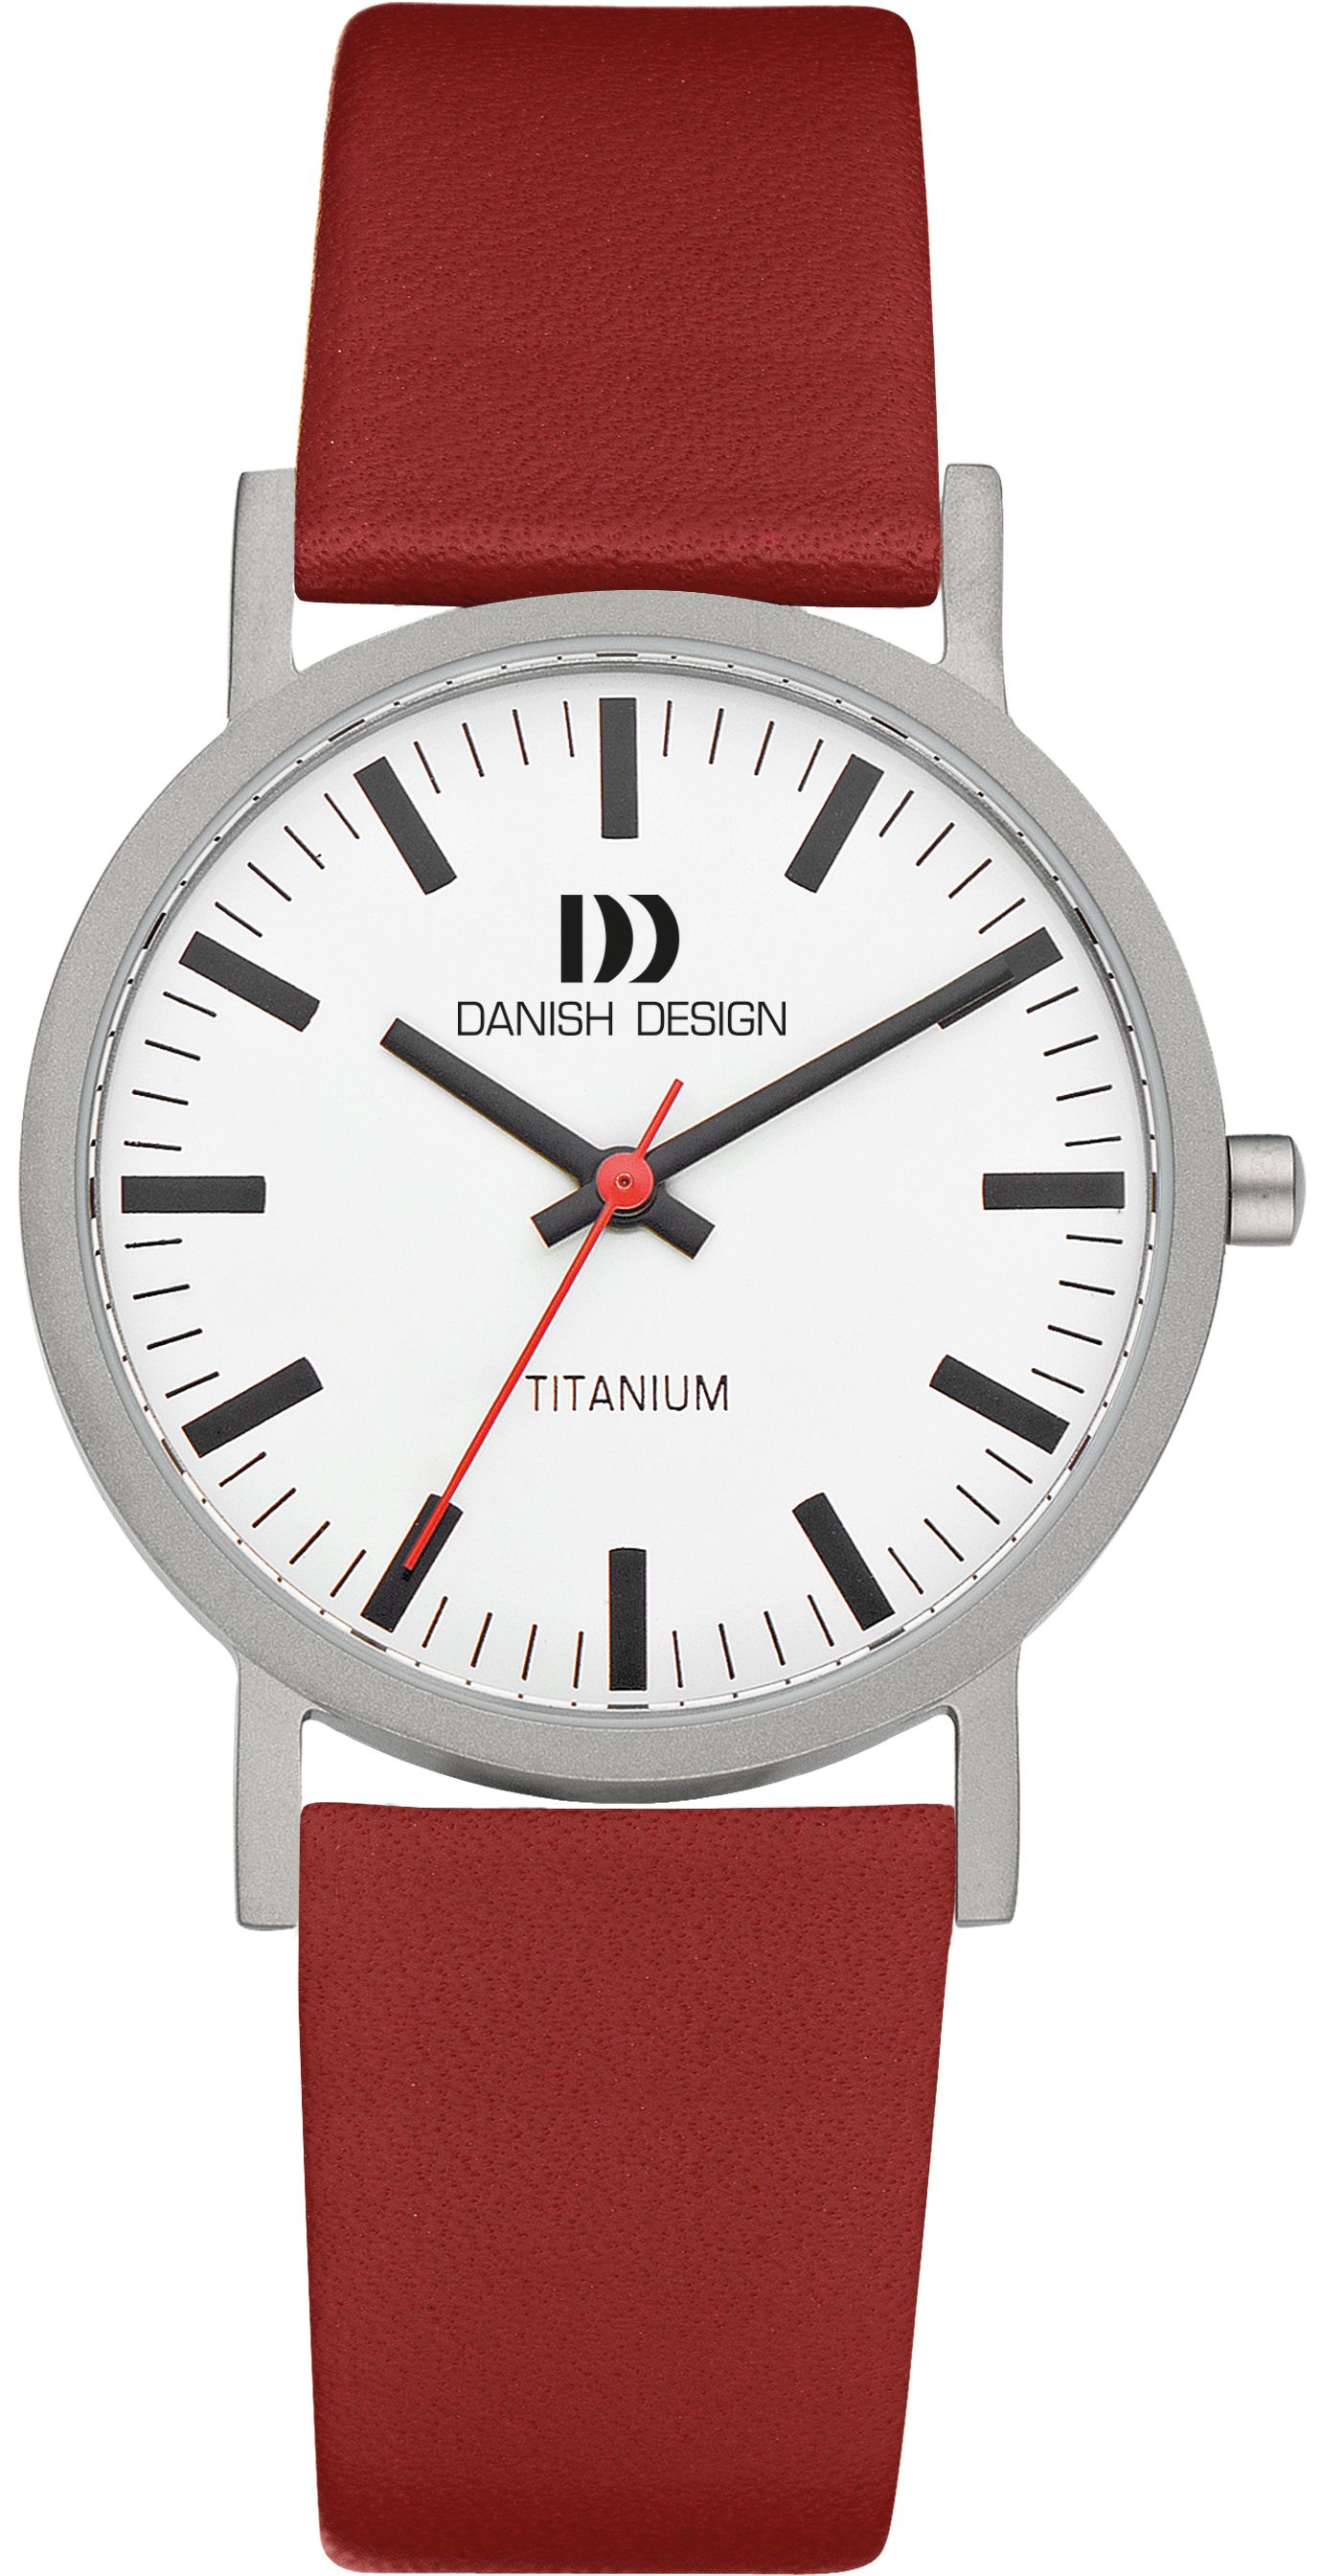 Danish Design Rhine Watch